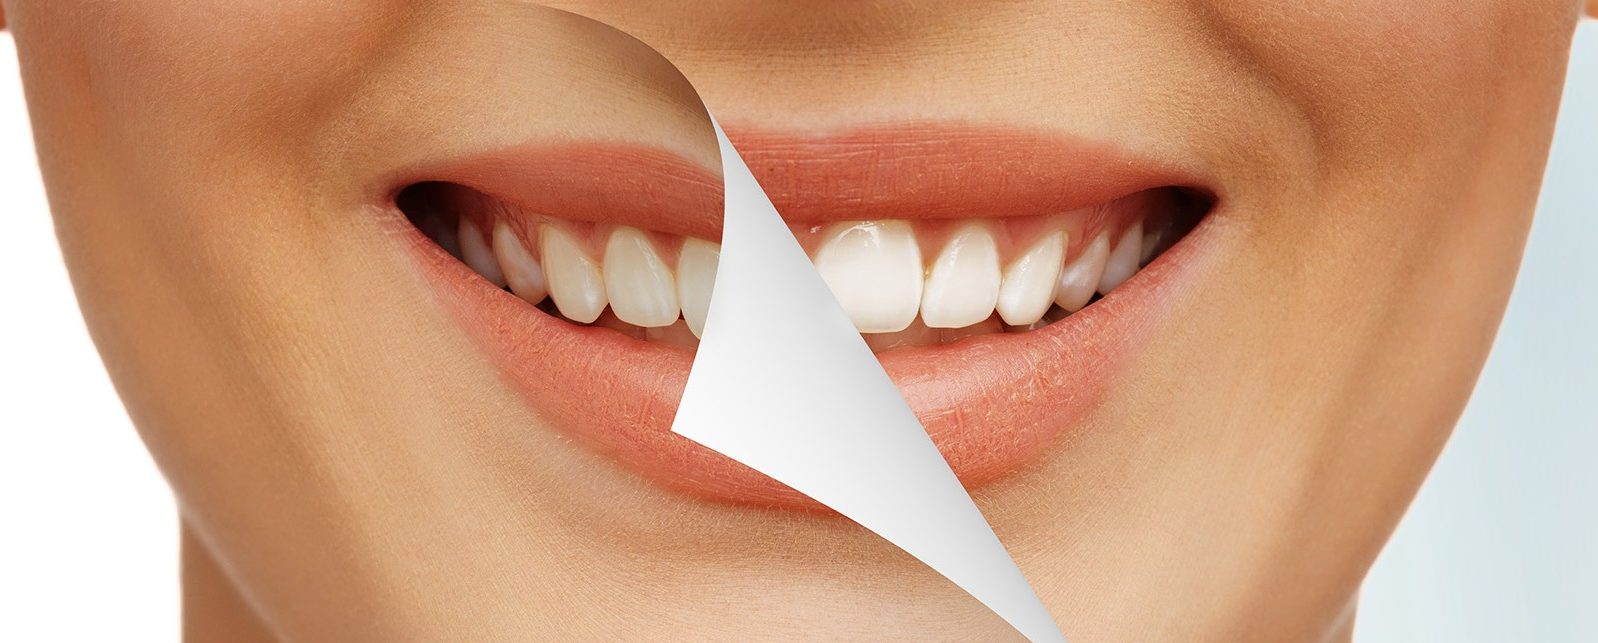 Безопасна ли процедура отбеливания зубов?